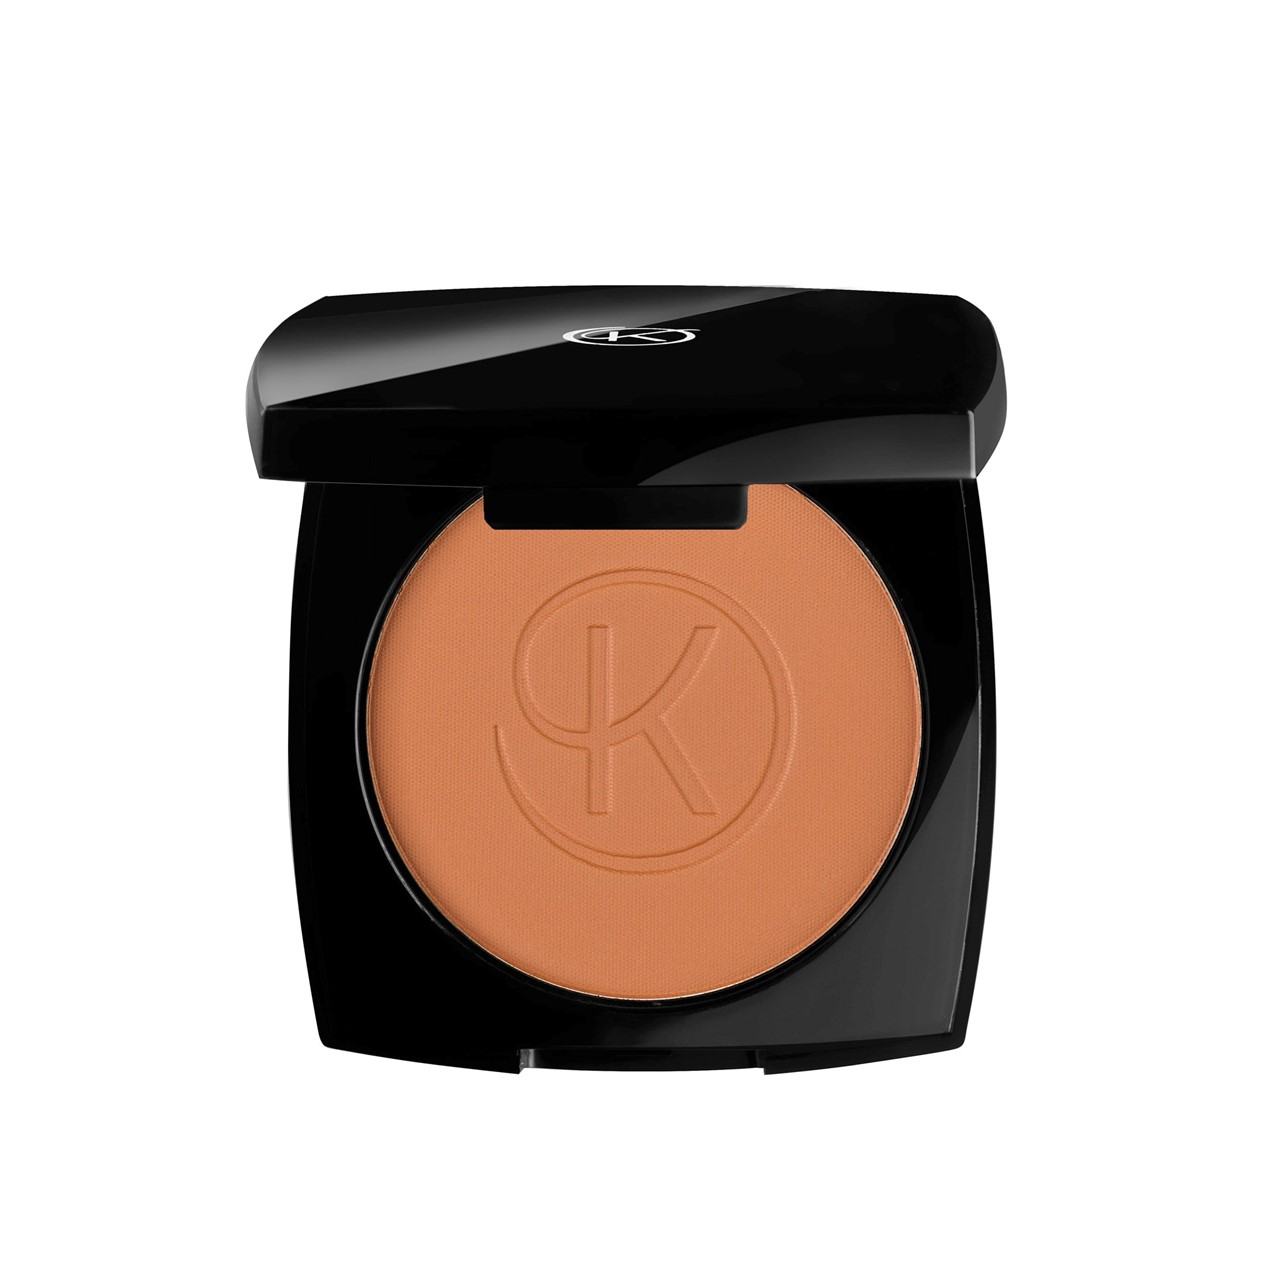 Korff Cure Make-Up Illuminating Compact Bronzing Powder 01 9g (0.32 oz)